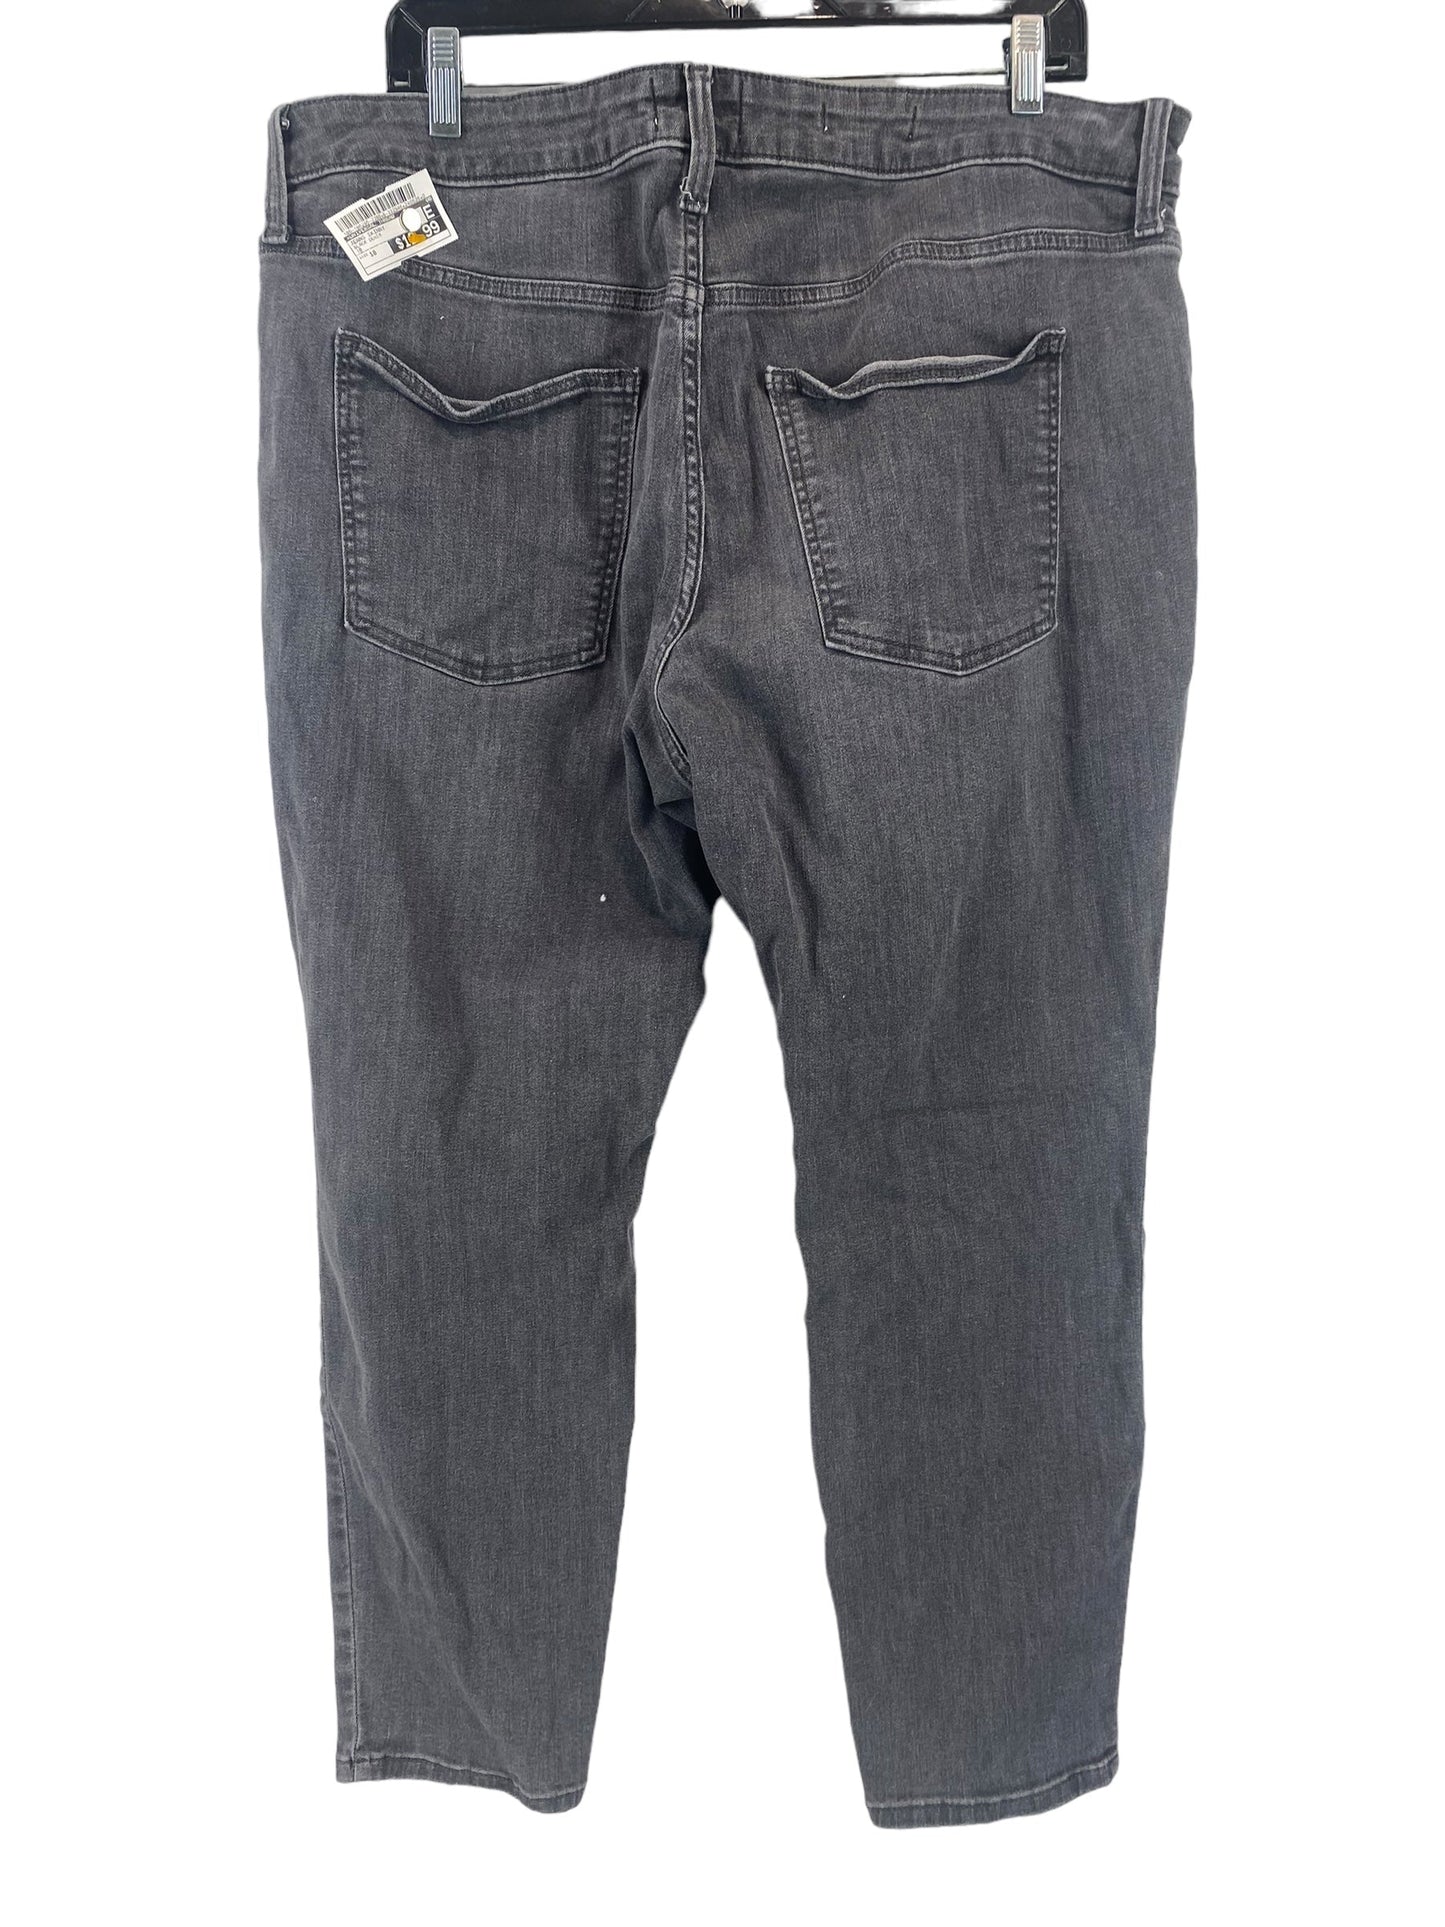 Black Denim Jeans Skinny Universal Thread, Size 18